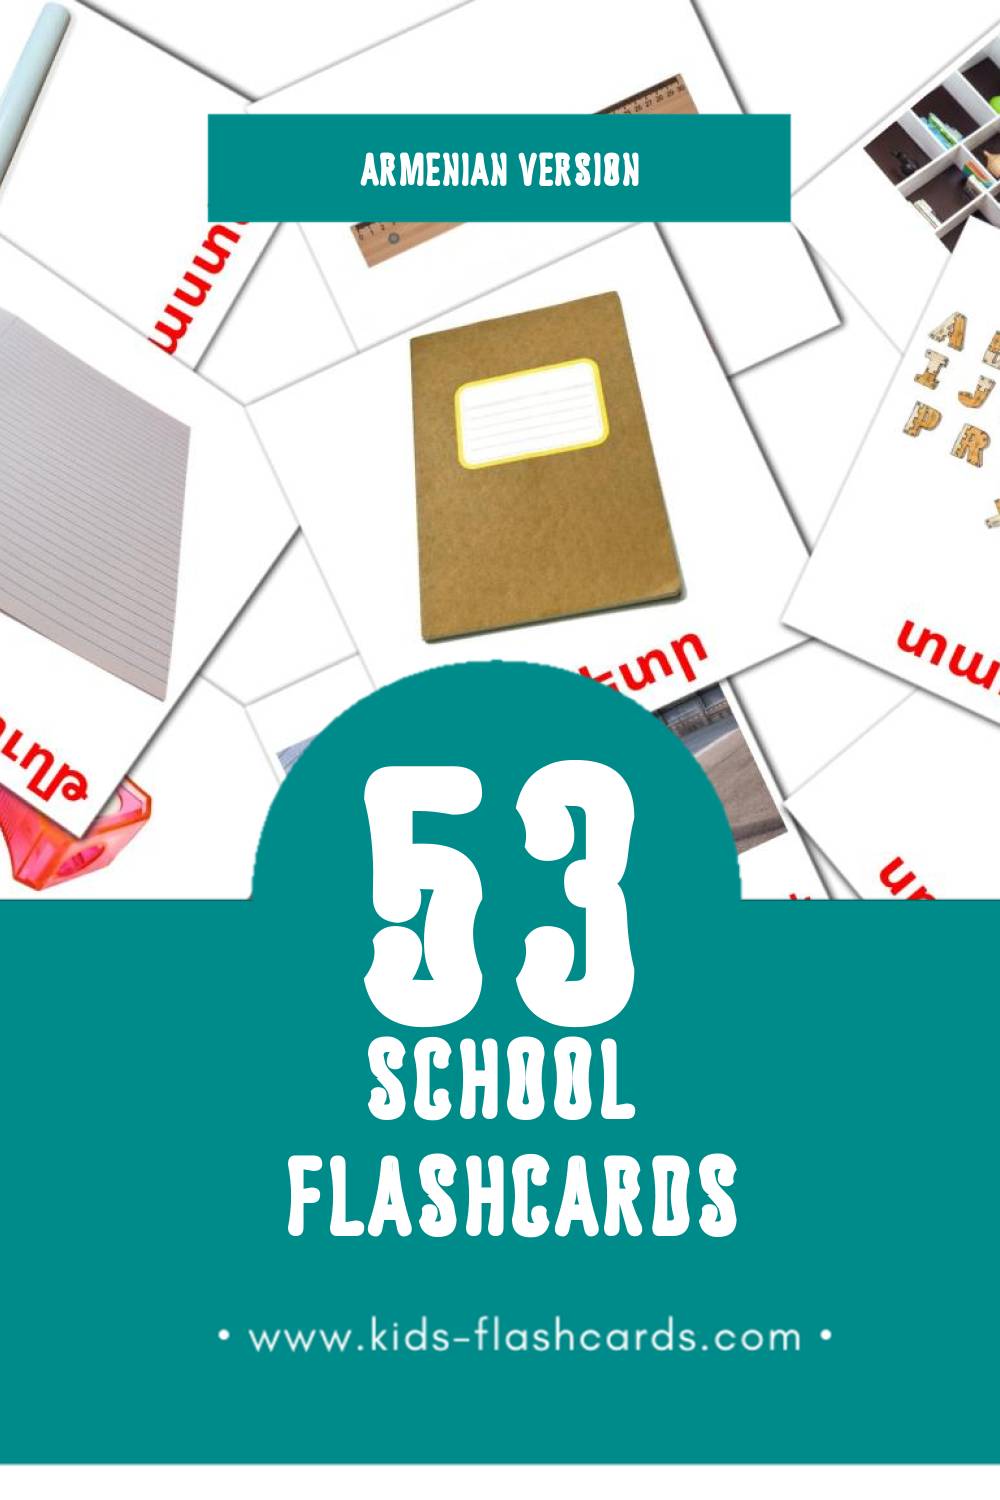 Visual Դպրոց Flashcards for Toddlers (53 cards in Armenian)